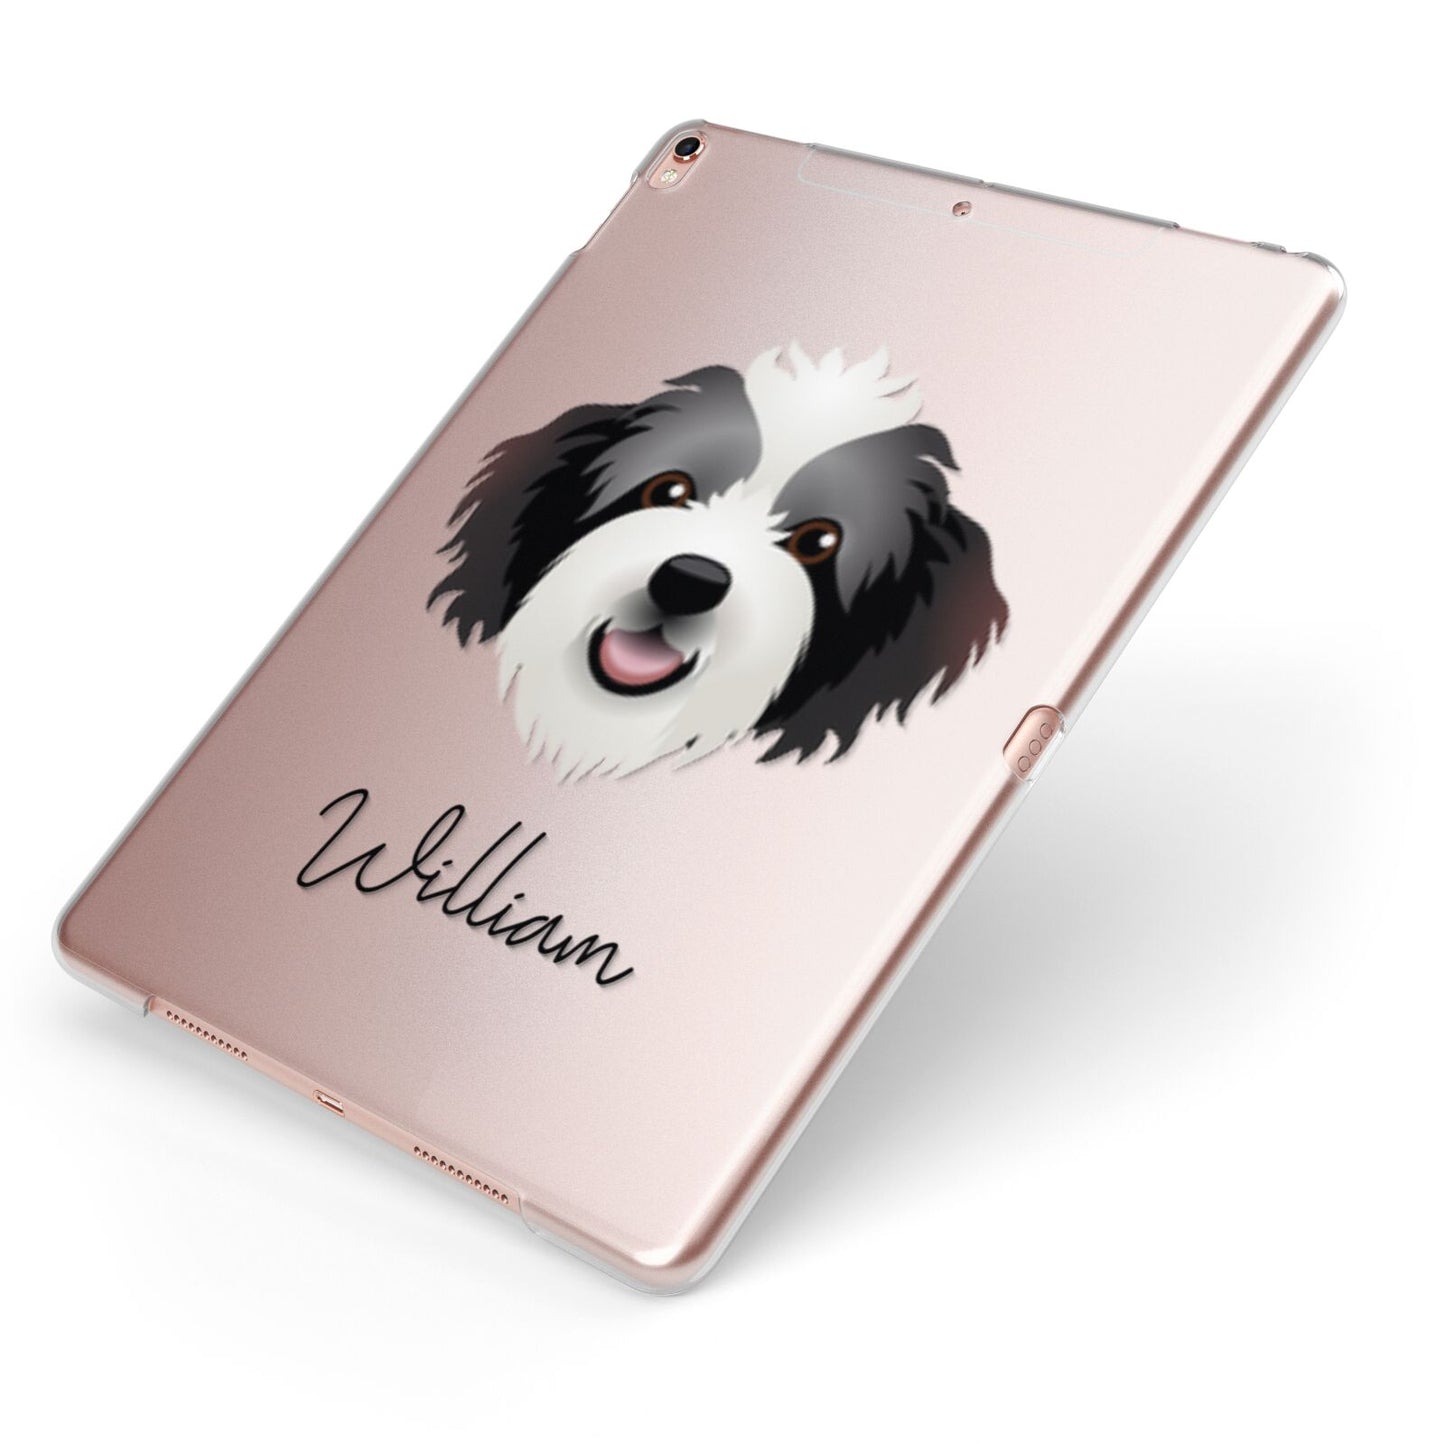 Bordoodle Personalised Apple iPad Case on Rose Gold iPad Side View